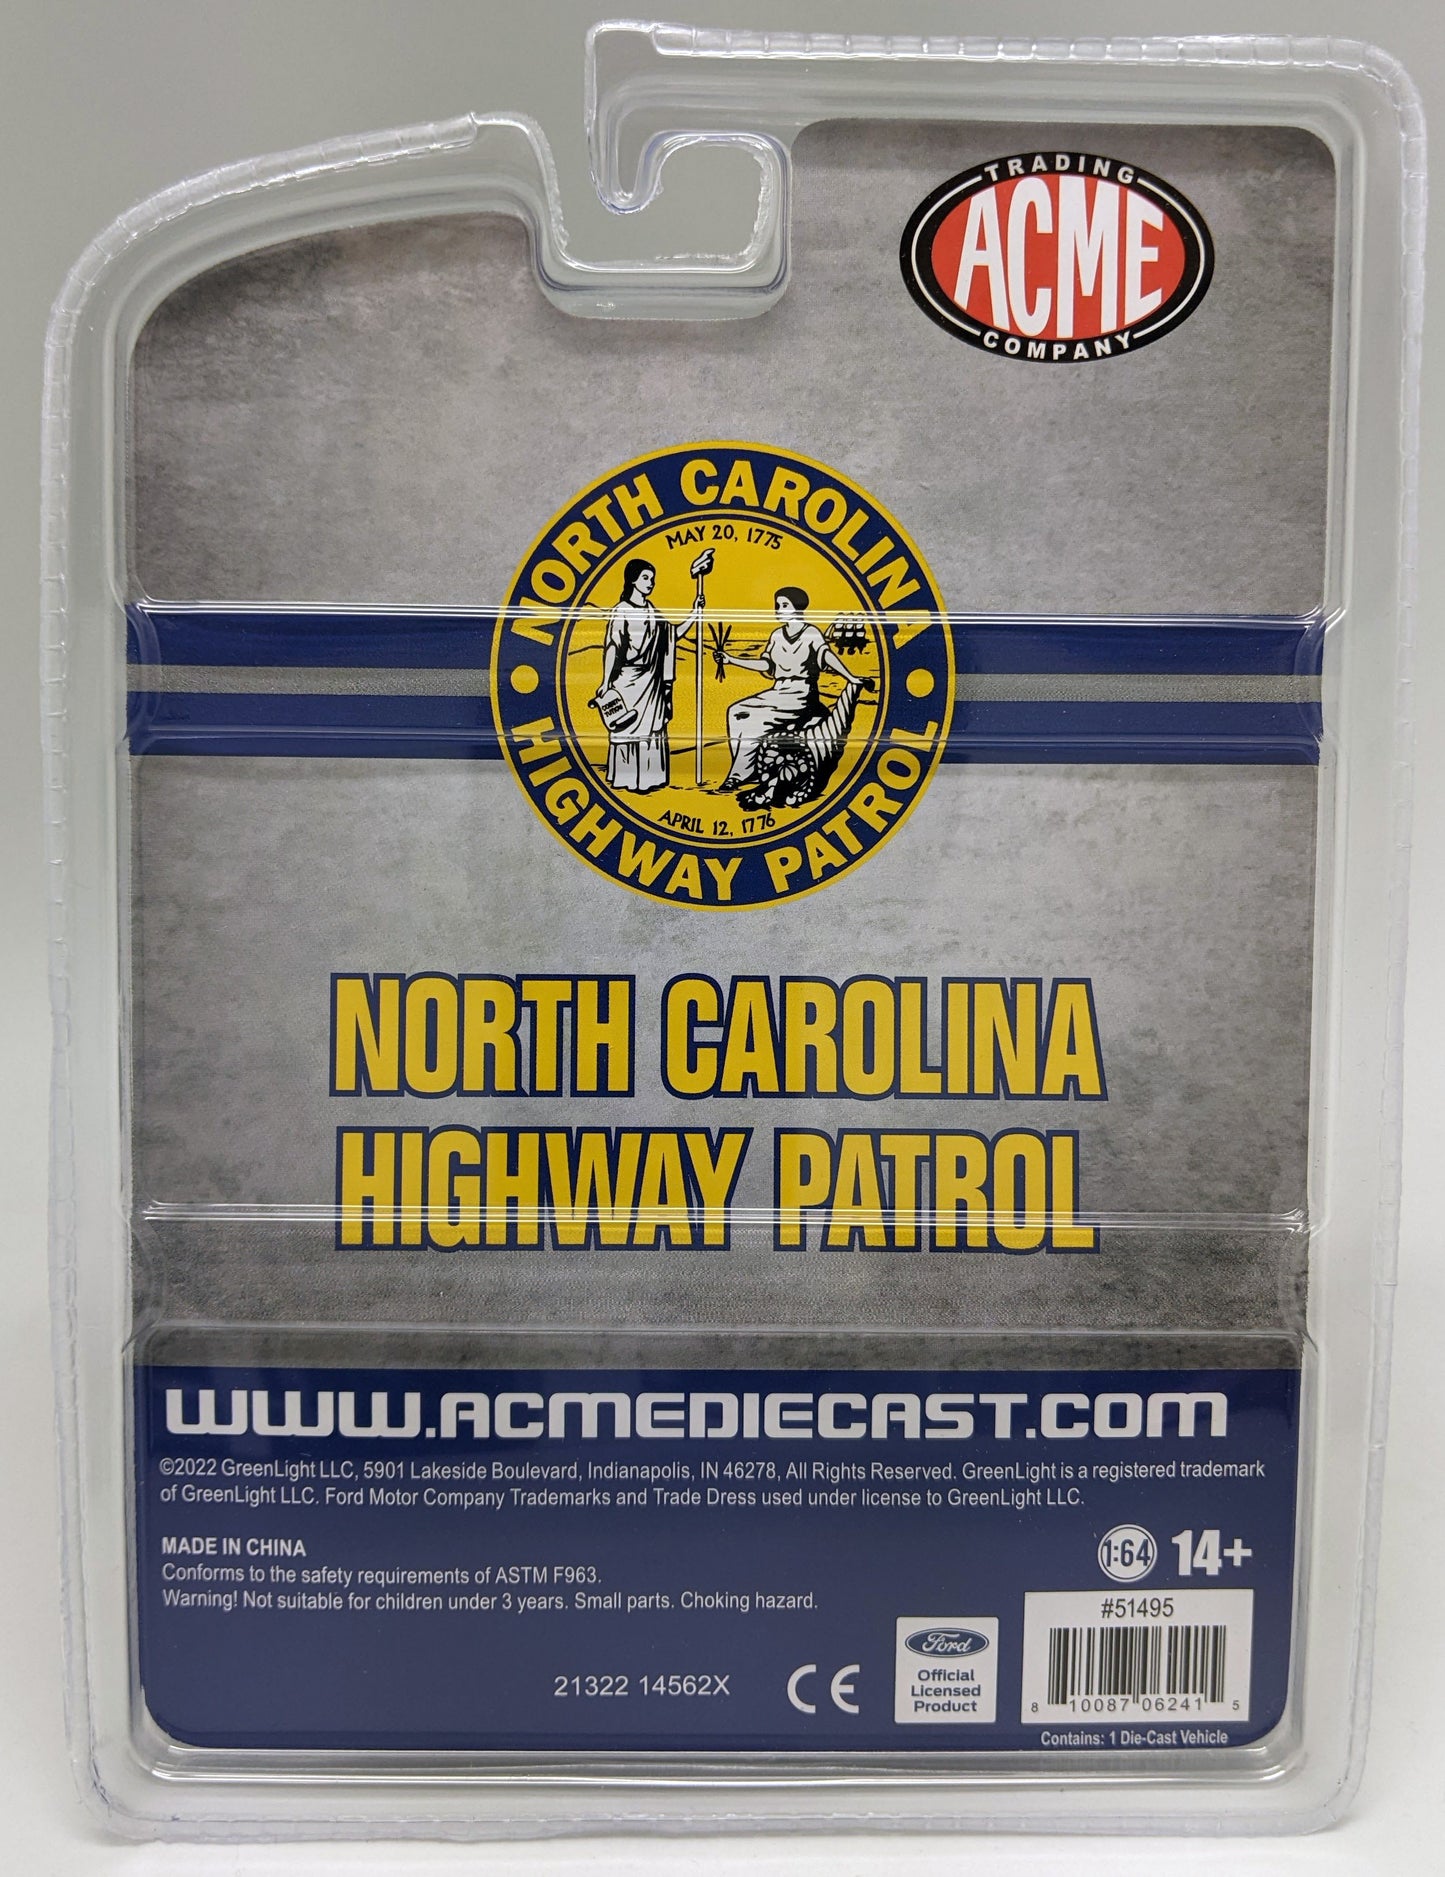 ACME - 1993 Ford Mustang SSP - North Carolina Highway Patrol